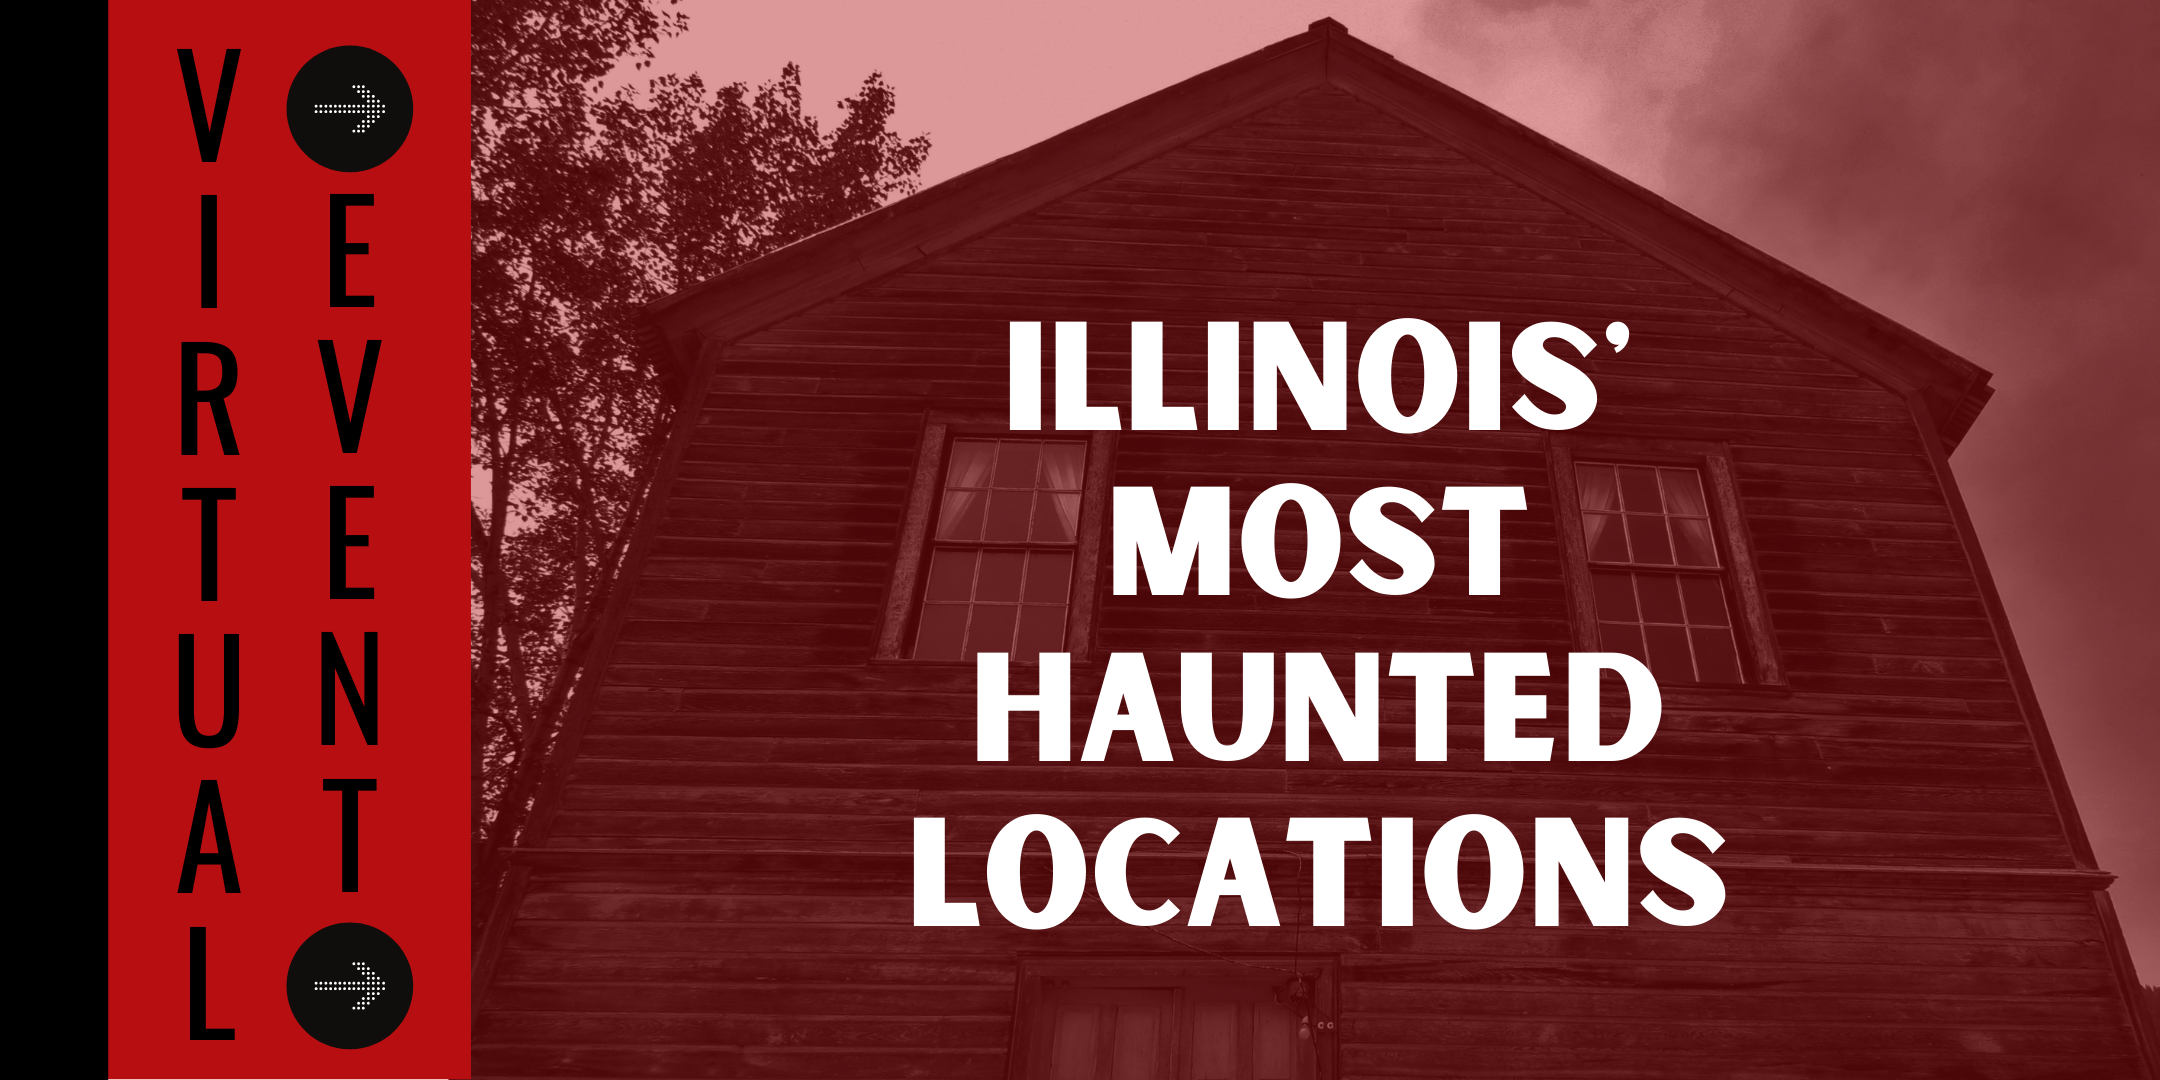 Illinois' Most Haunted Locations image